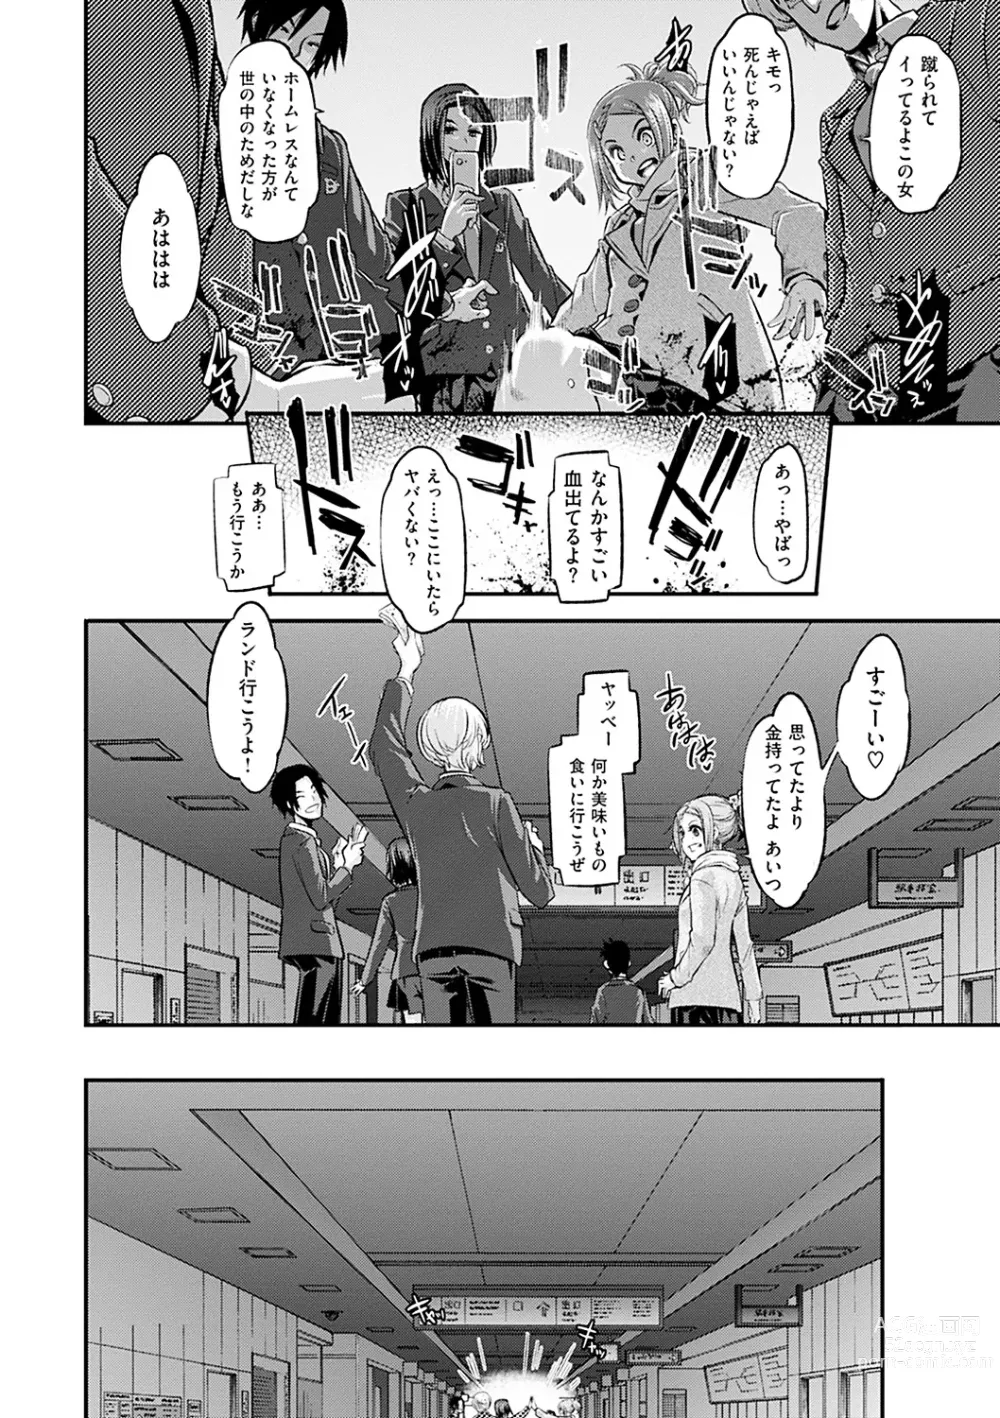 Page 233 of manga Emergence